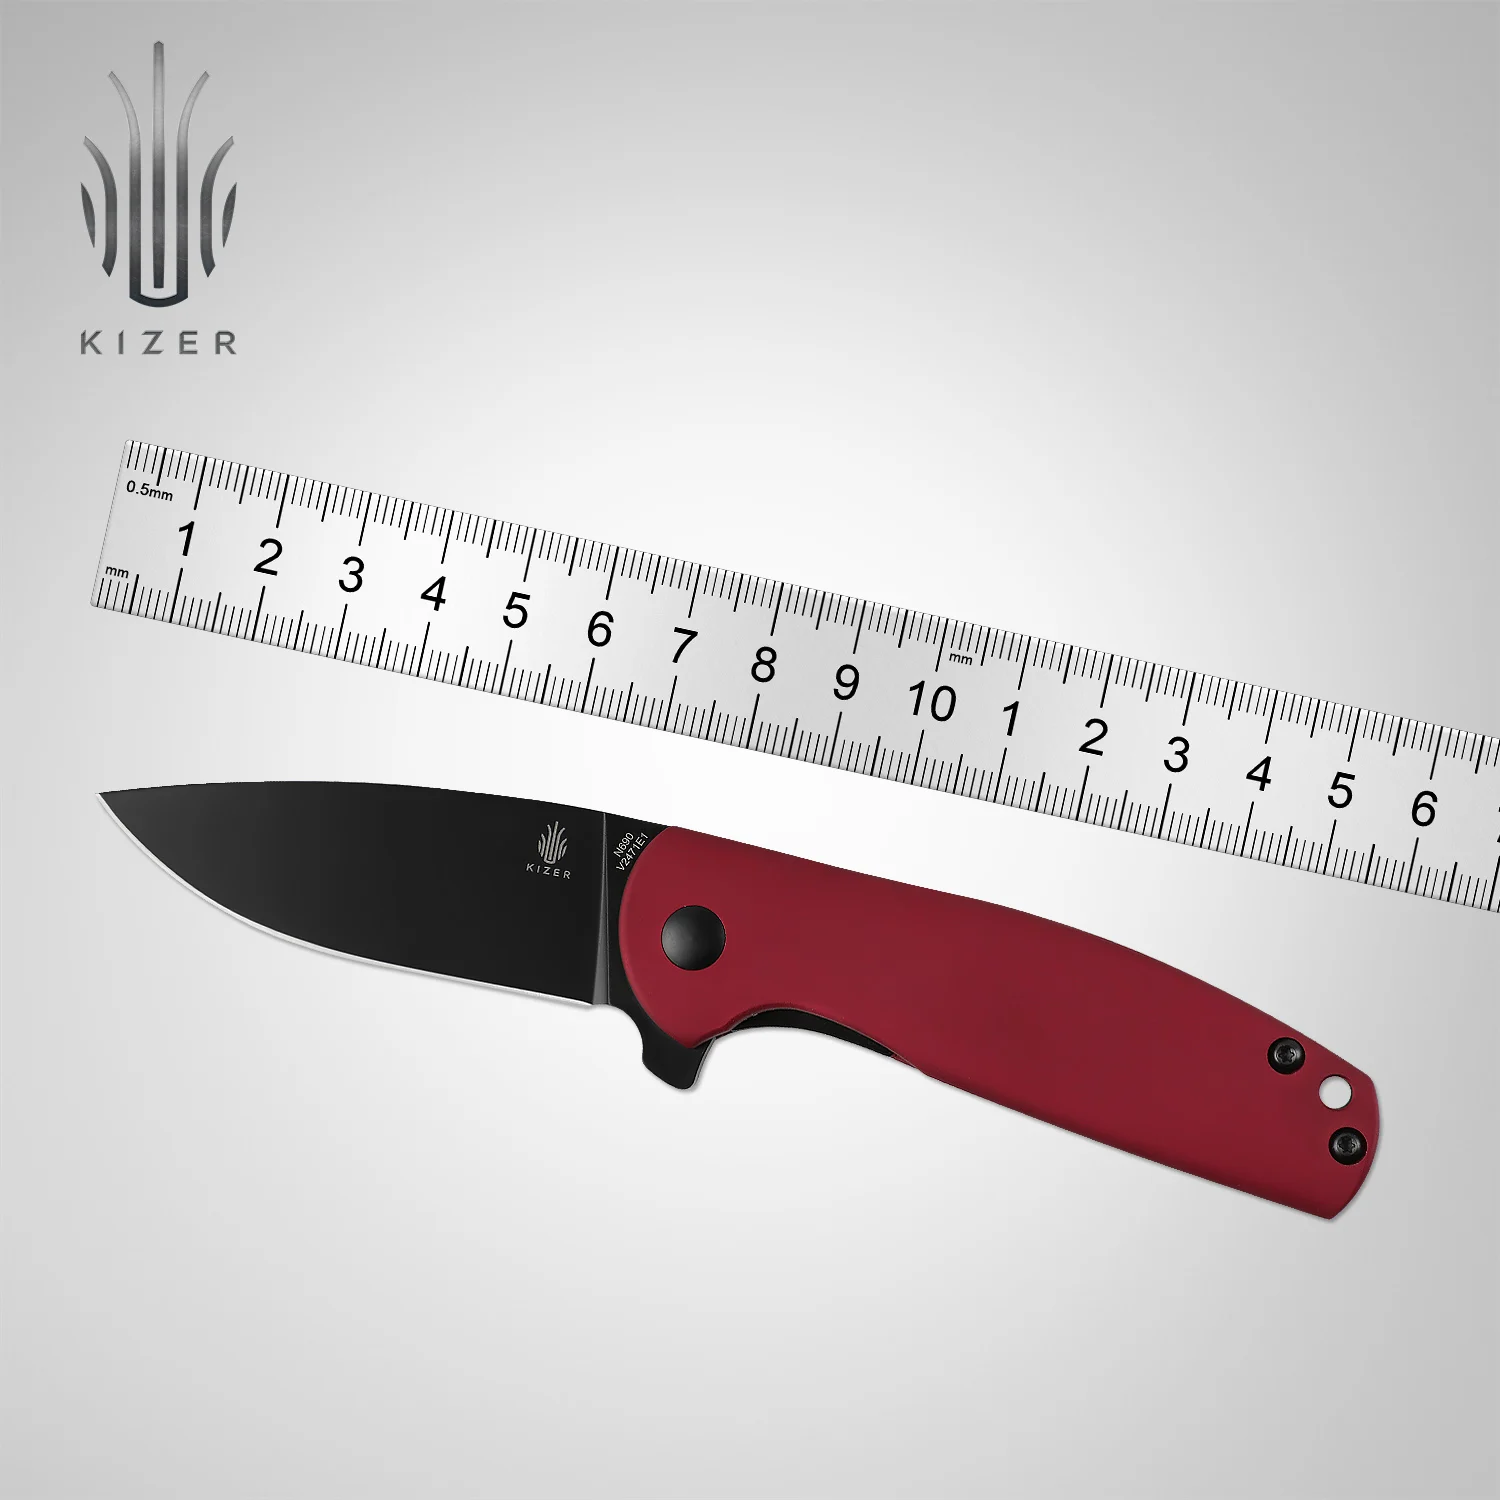 Kizer Mojave Exclusive V2471E1/V2471E2 Gemini Mini Red/Blue Matte Aluminum Pocket Knife Black Coated N690 Blade Flipper Knife